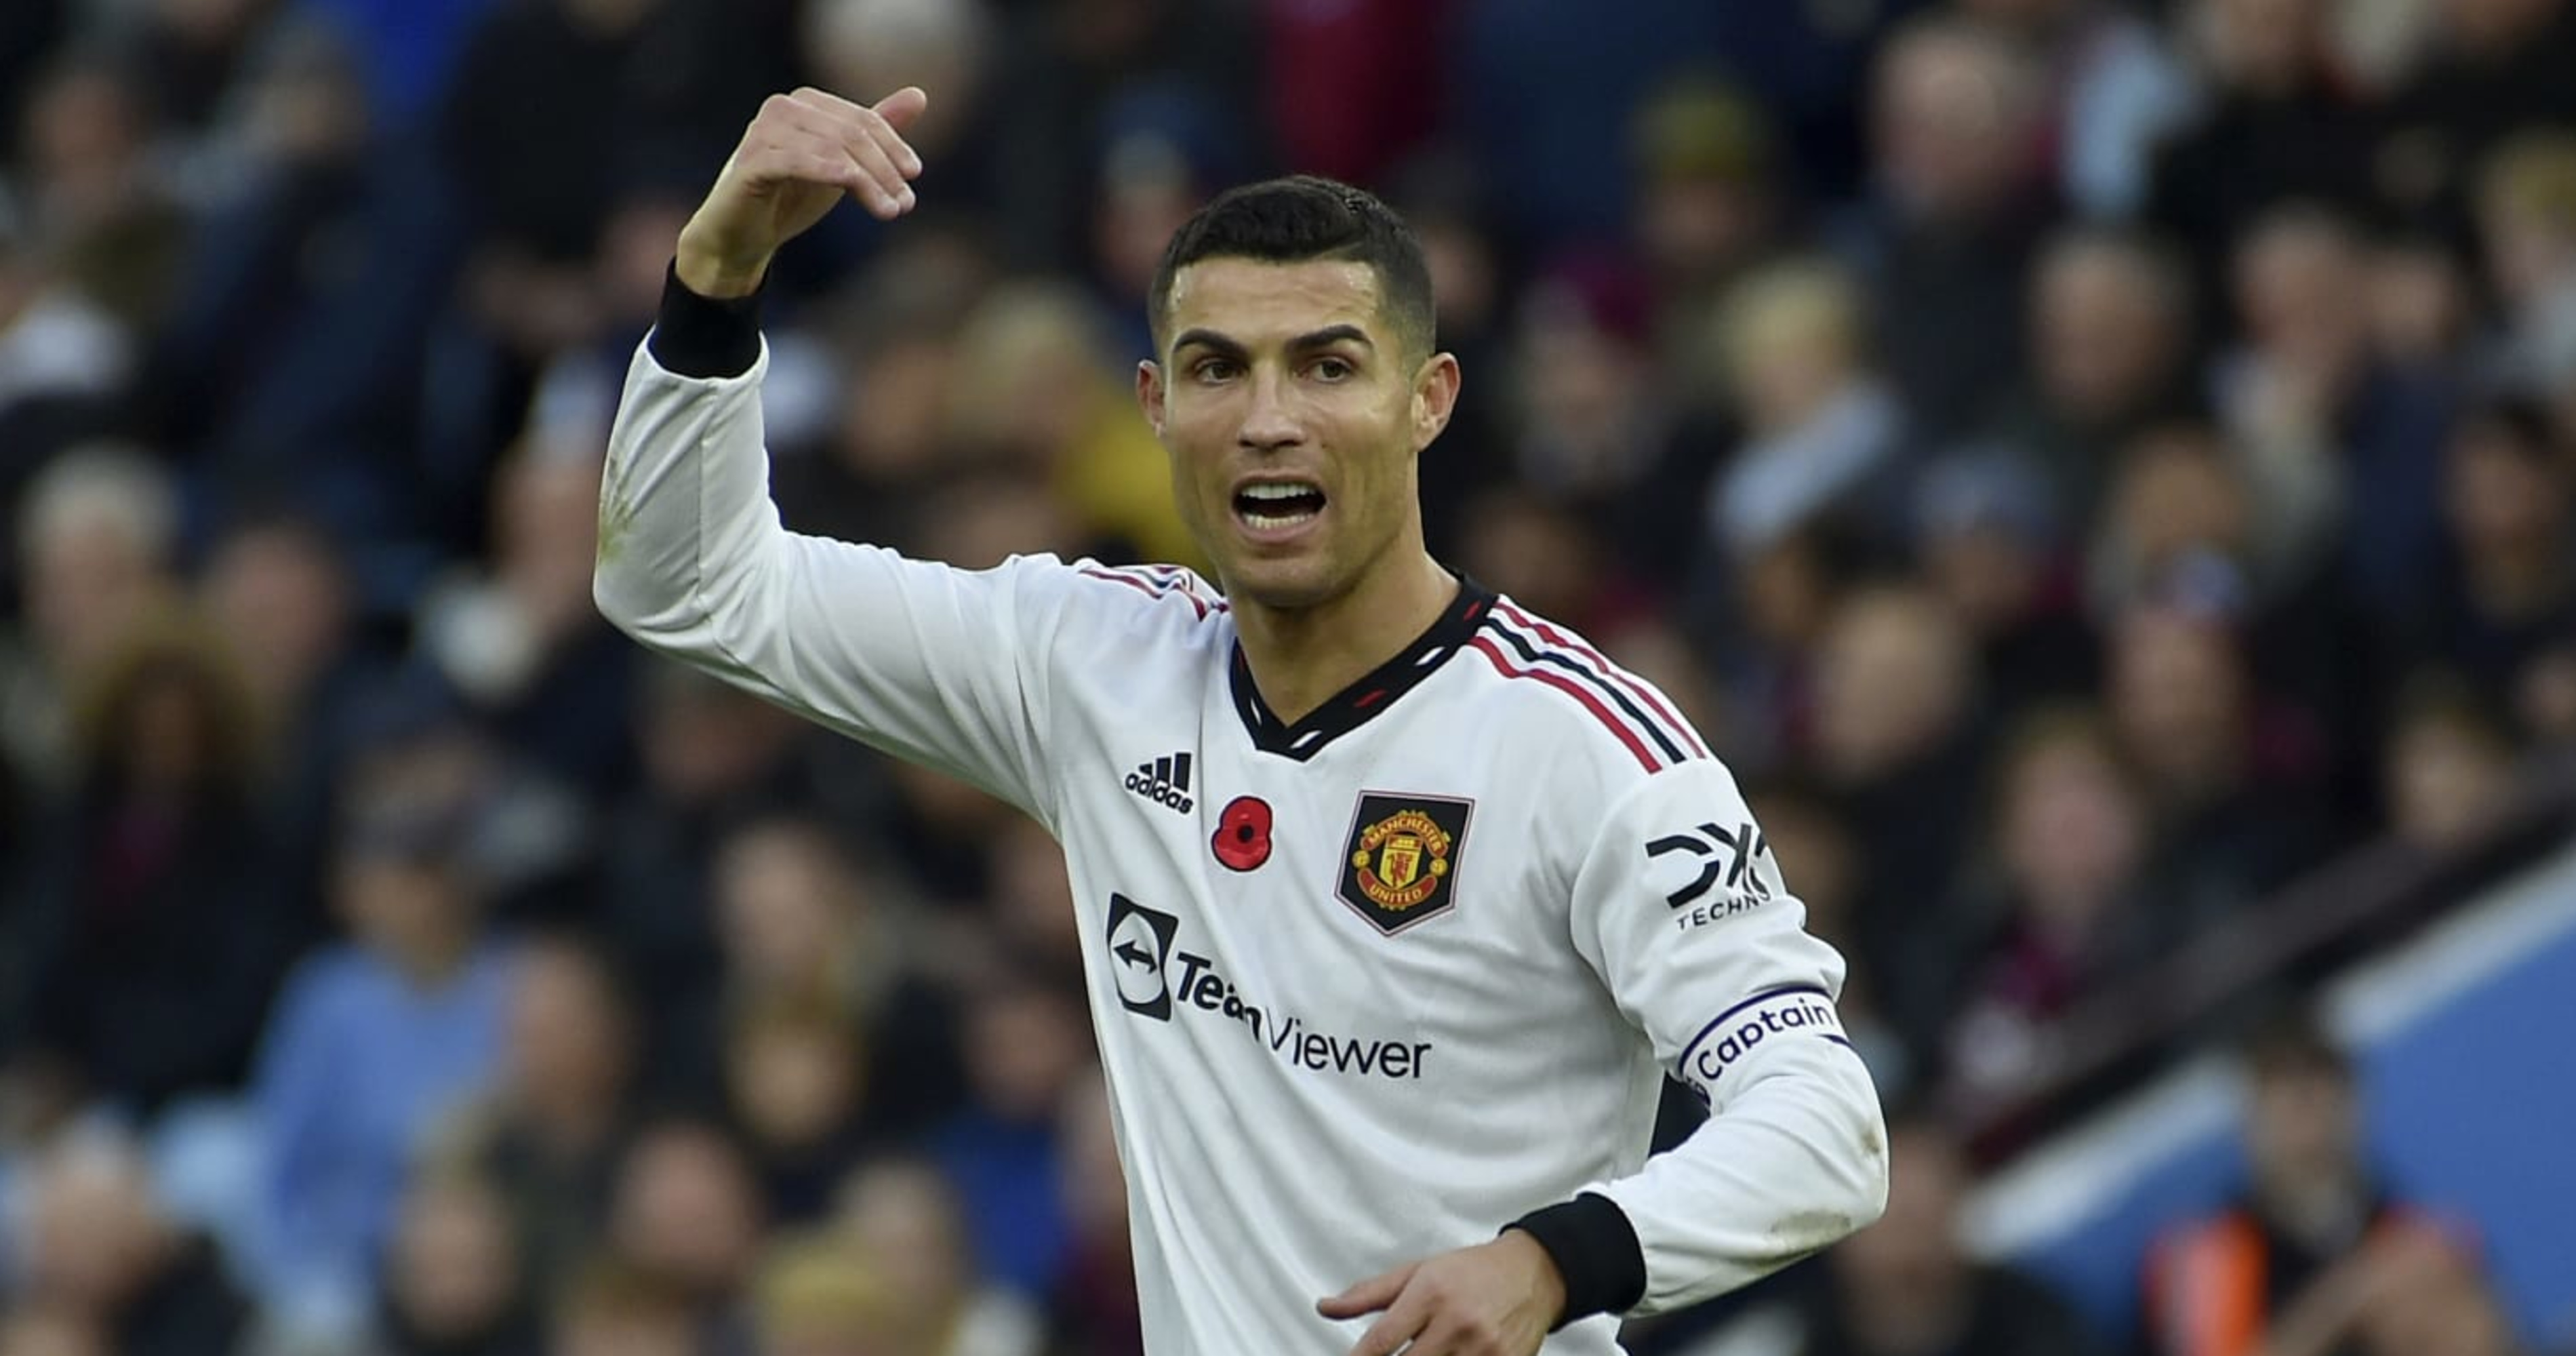 Man Utd owners consider sale of club as Ronaldo leaves 'immediately